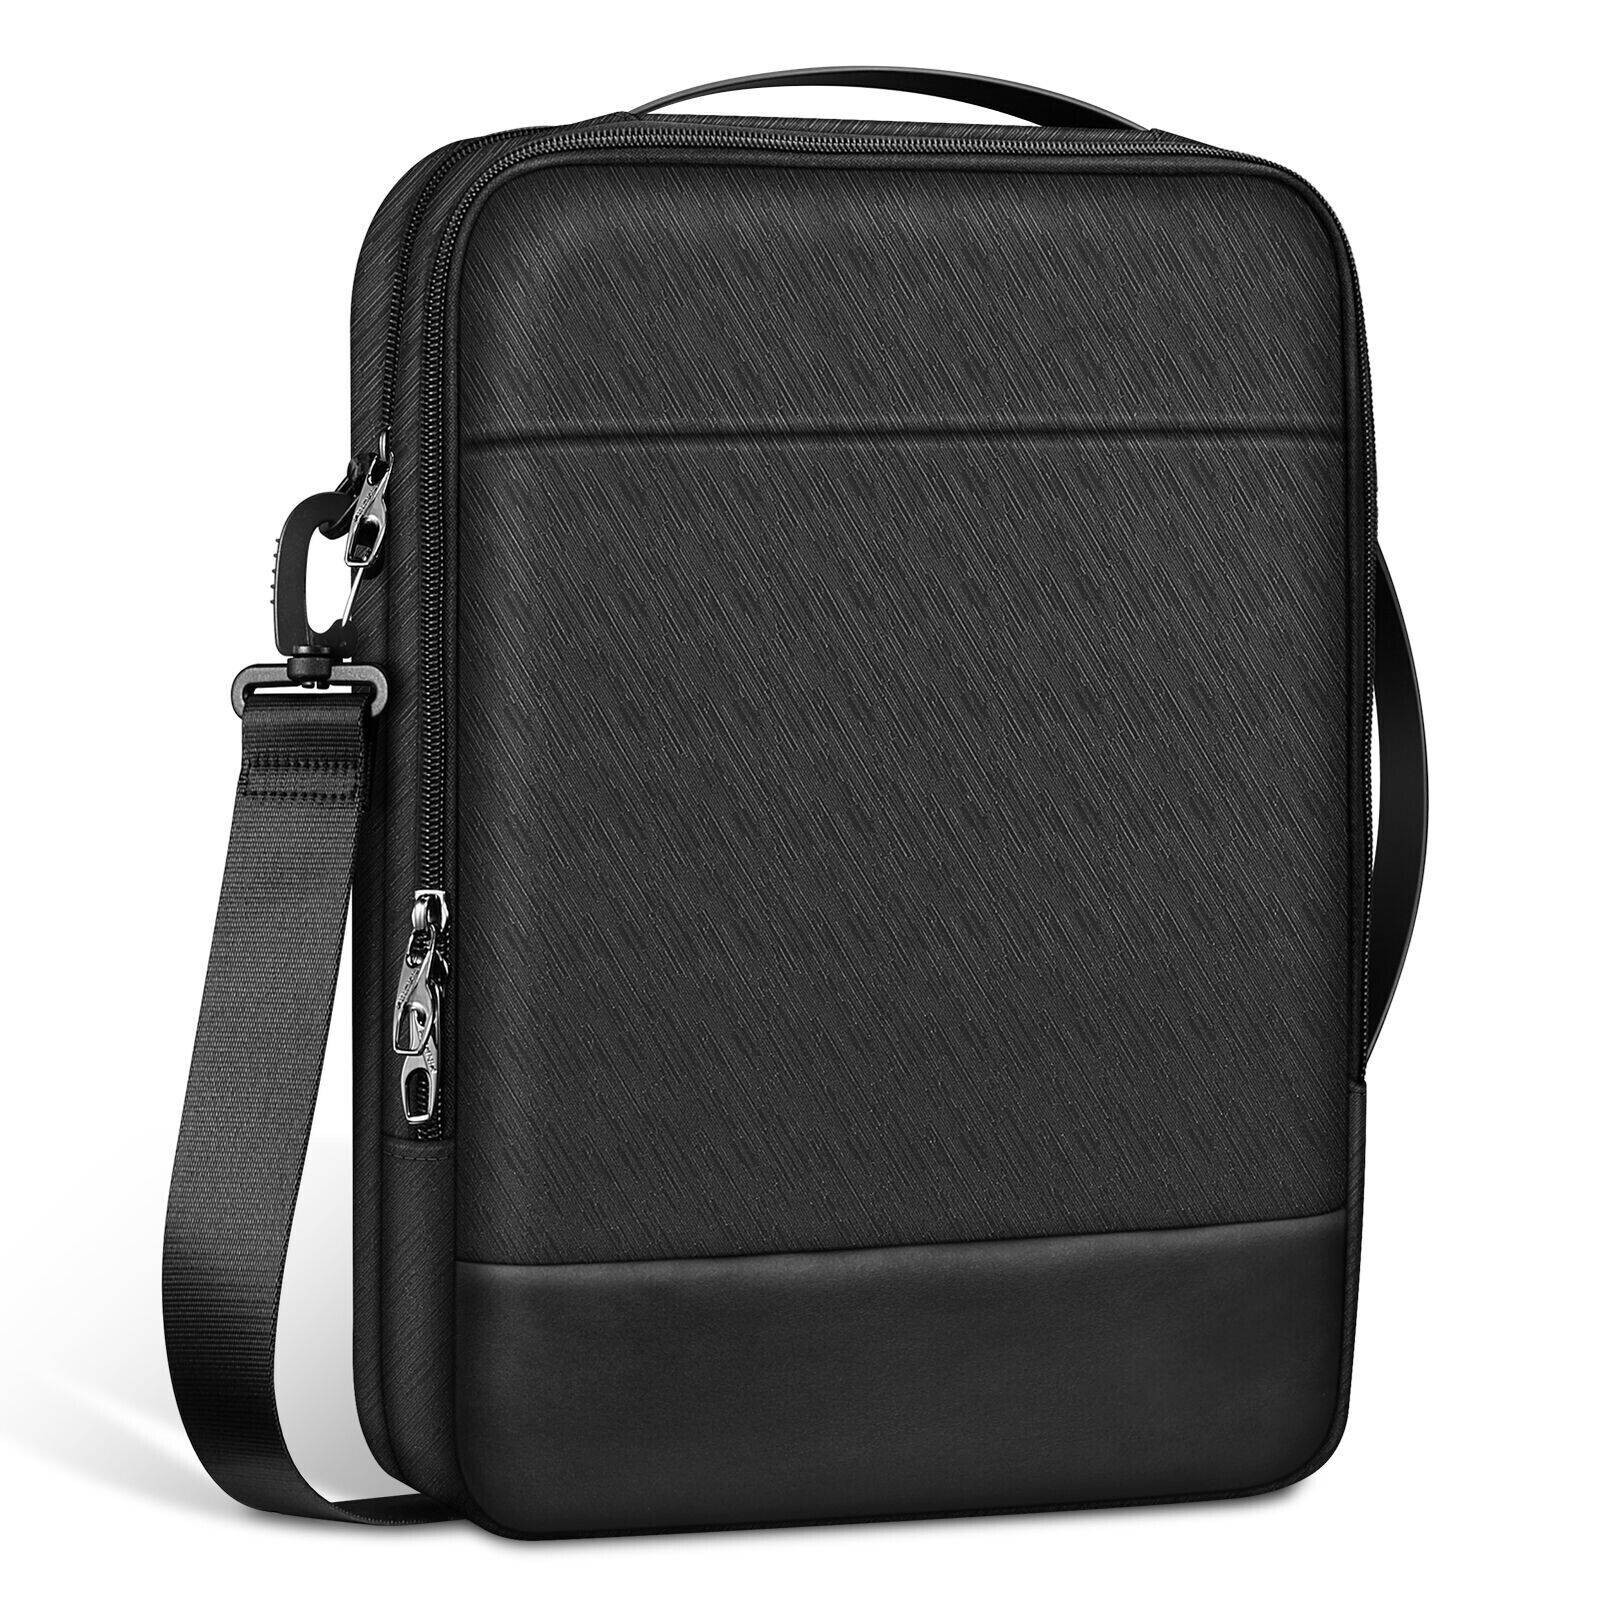  13 inch Laptop Shoulder Bag Briefcase Tablet Carrying Case for MacBook Air 15